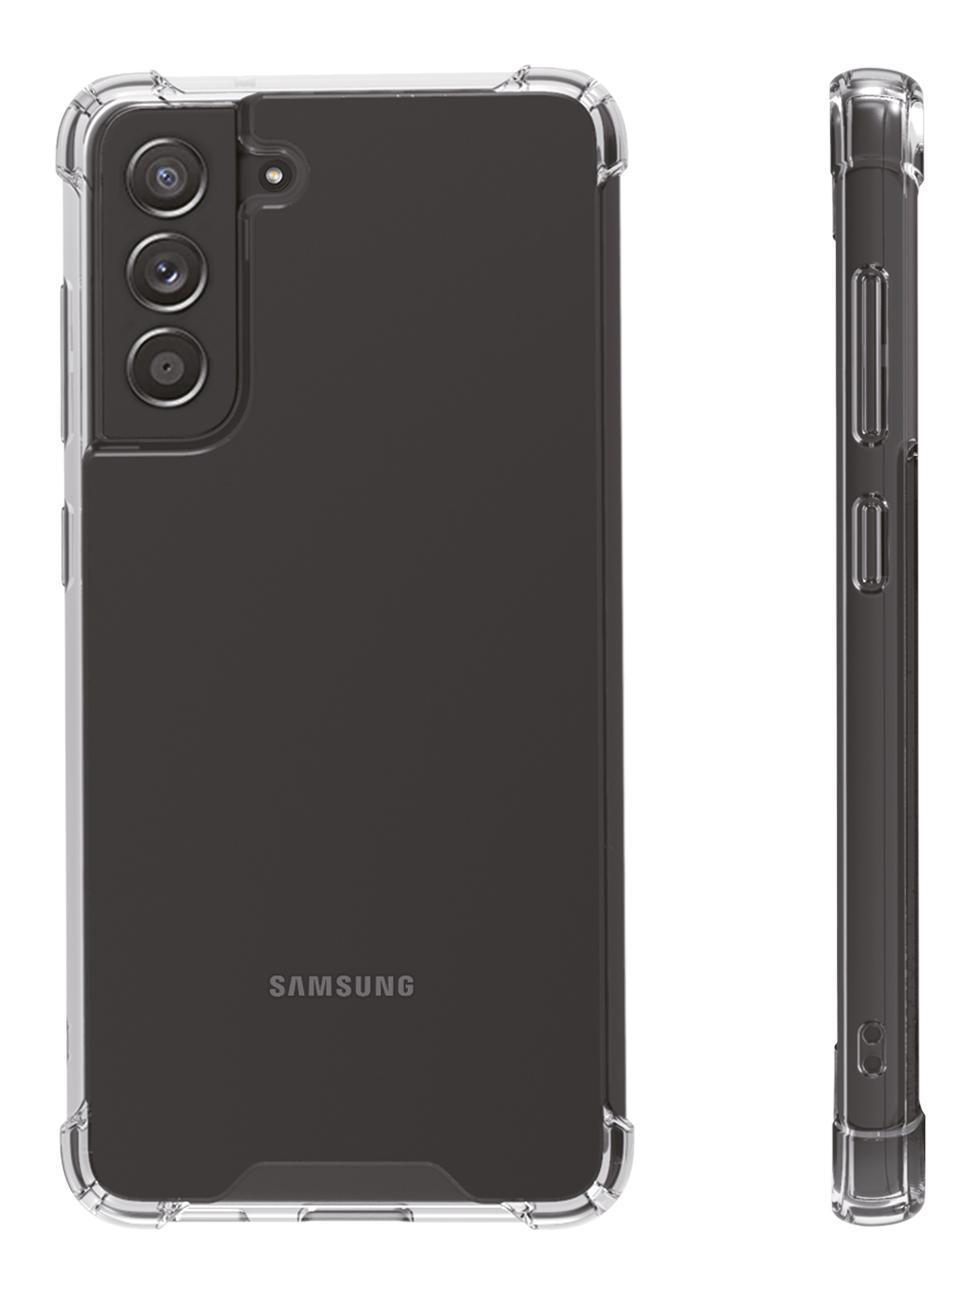 VIVANCO Safe and Steady, Samsung, Shock S21 Backcover, Schutzhülle, Anti FE, Galaxy Transparent